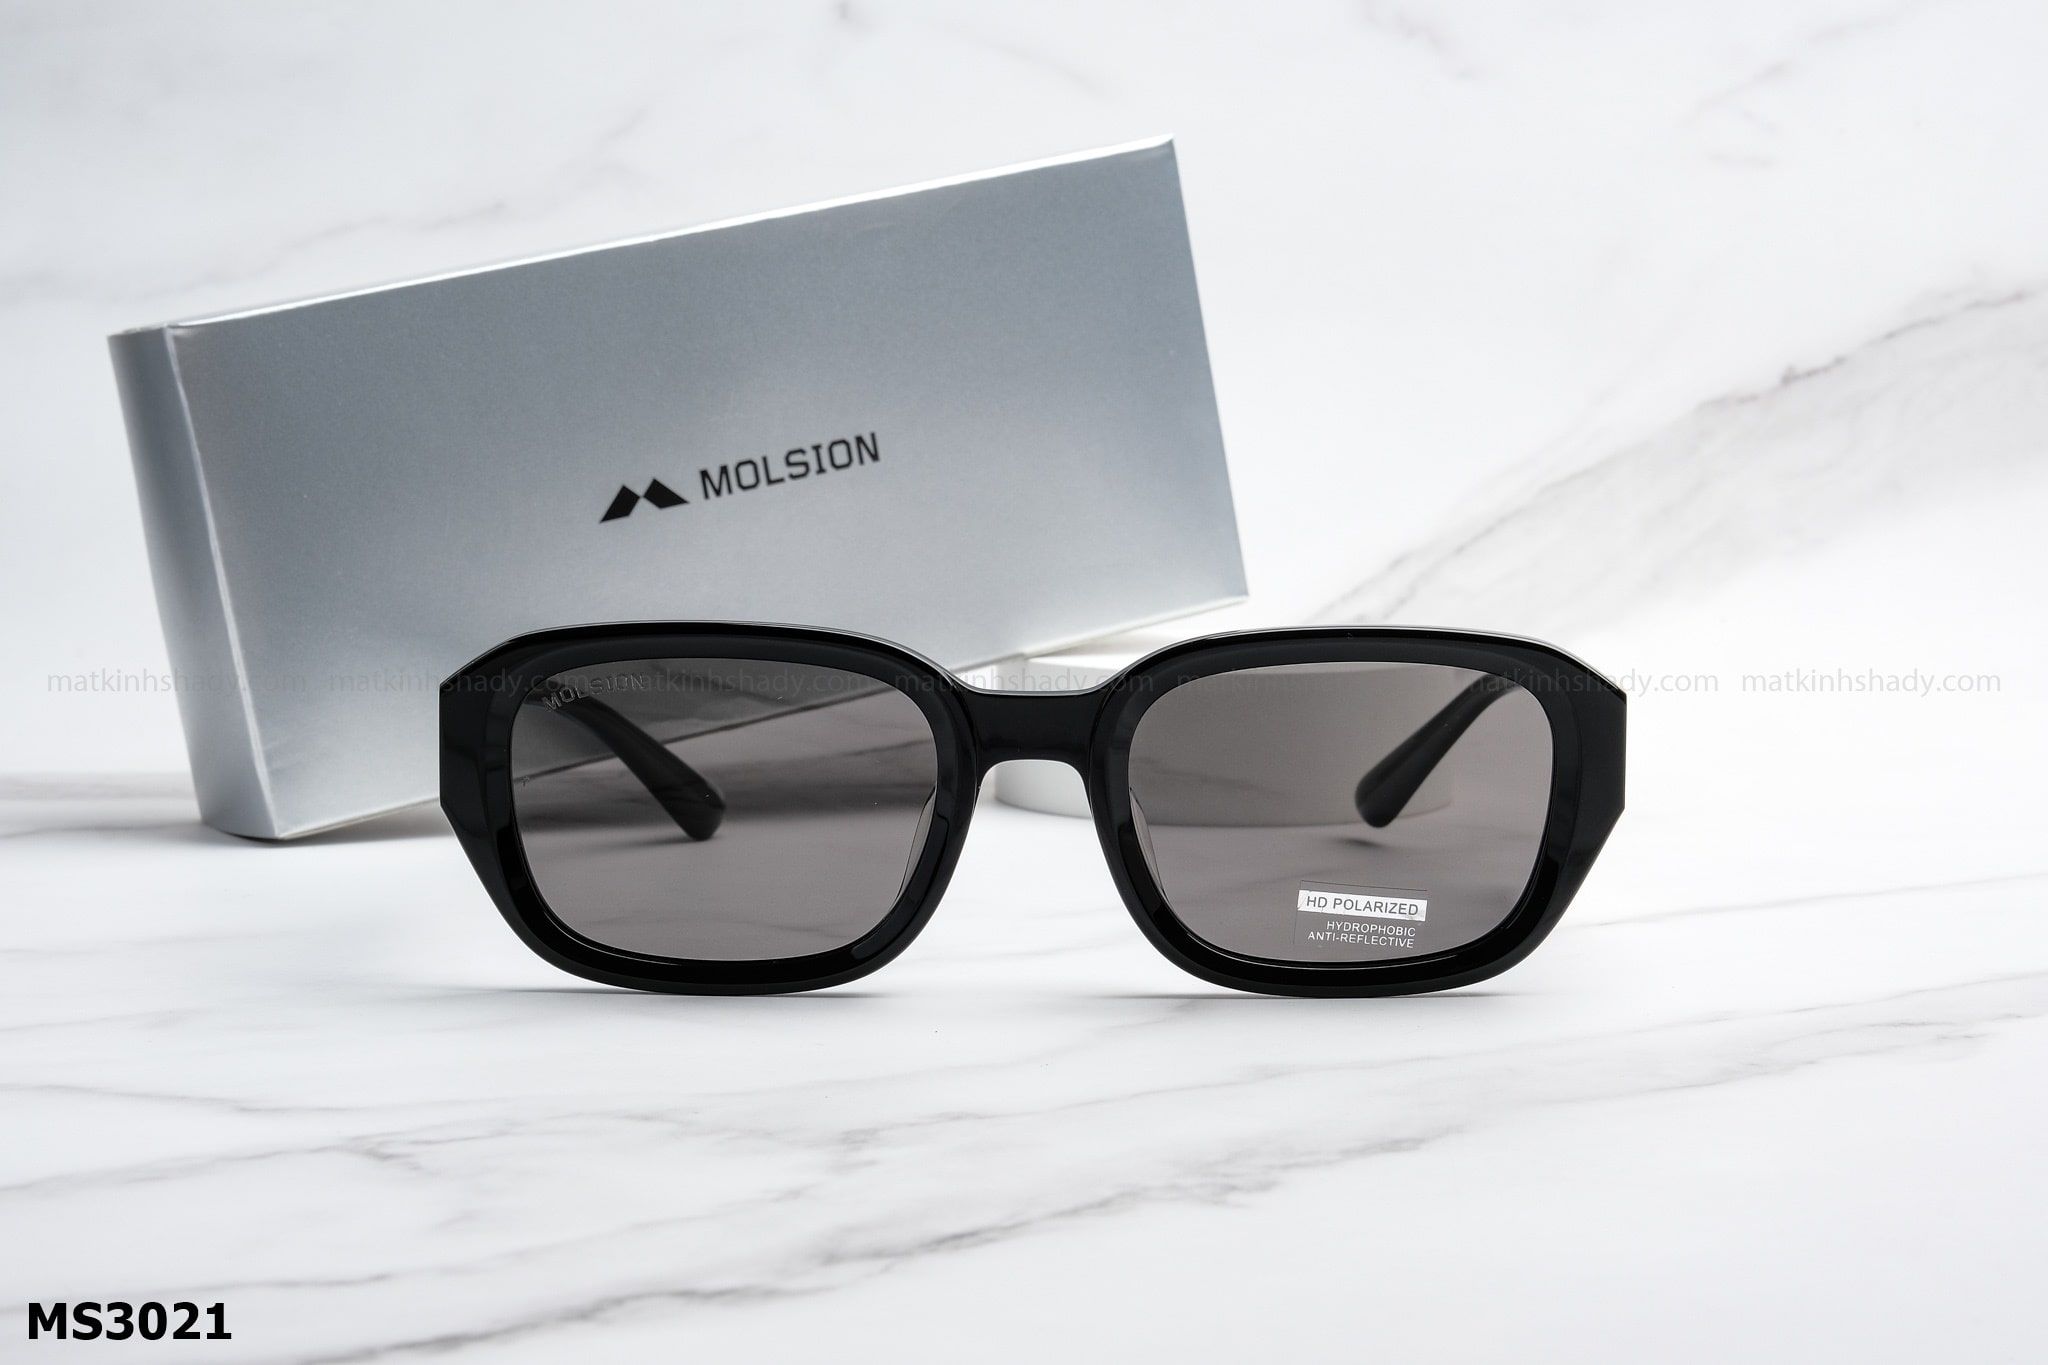  Molsion Eyewear - Sunglasses - MS3021 